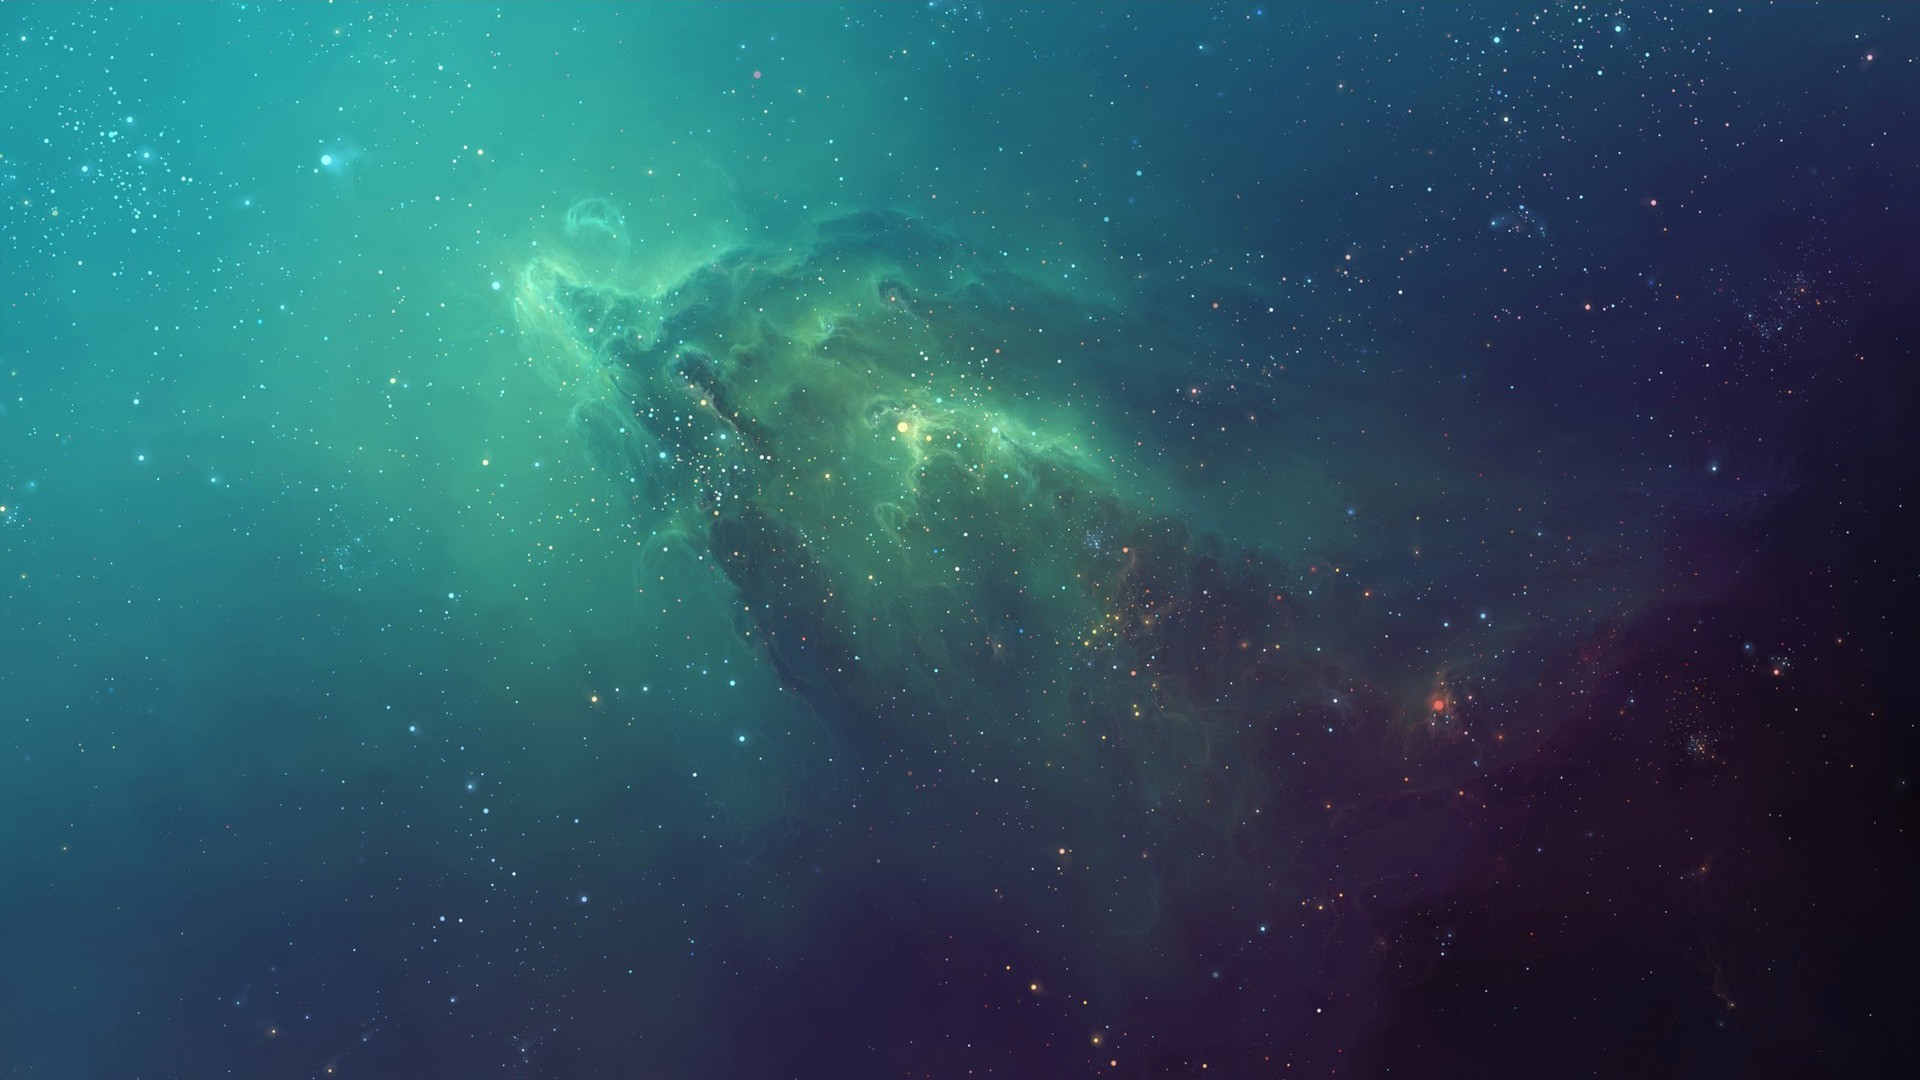  Blue  Galaxy wallpaper    Download free amazing full HD  